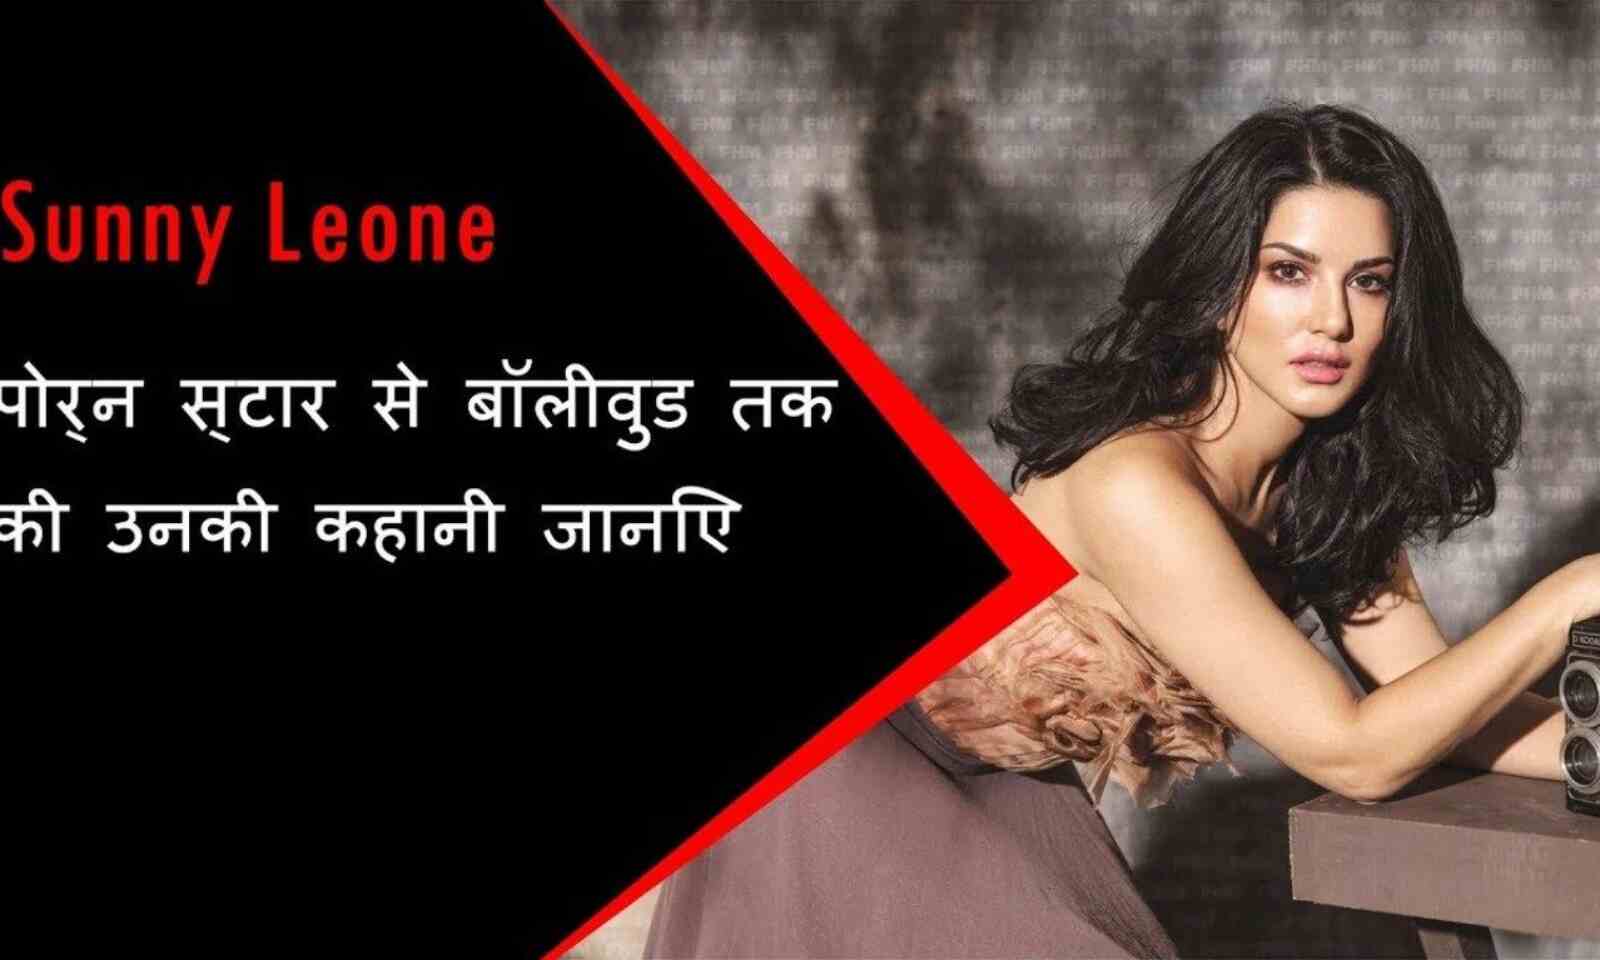 Sunny Leone Biography In Hindi | सन्नी लियोन का जीवन परिचय | Sunny Leone  Wiki, Biography in Hindi, Sexy Wallpapers, Hot Images, Husband, Records,  Net Worth